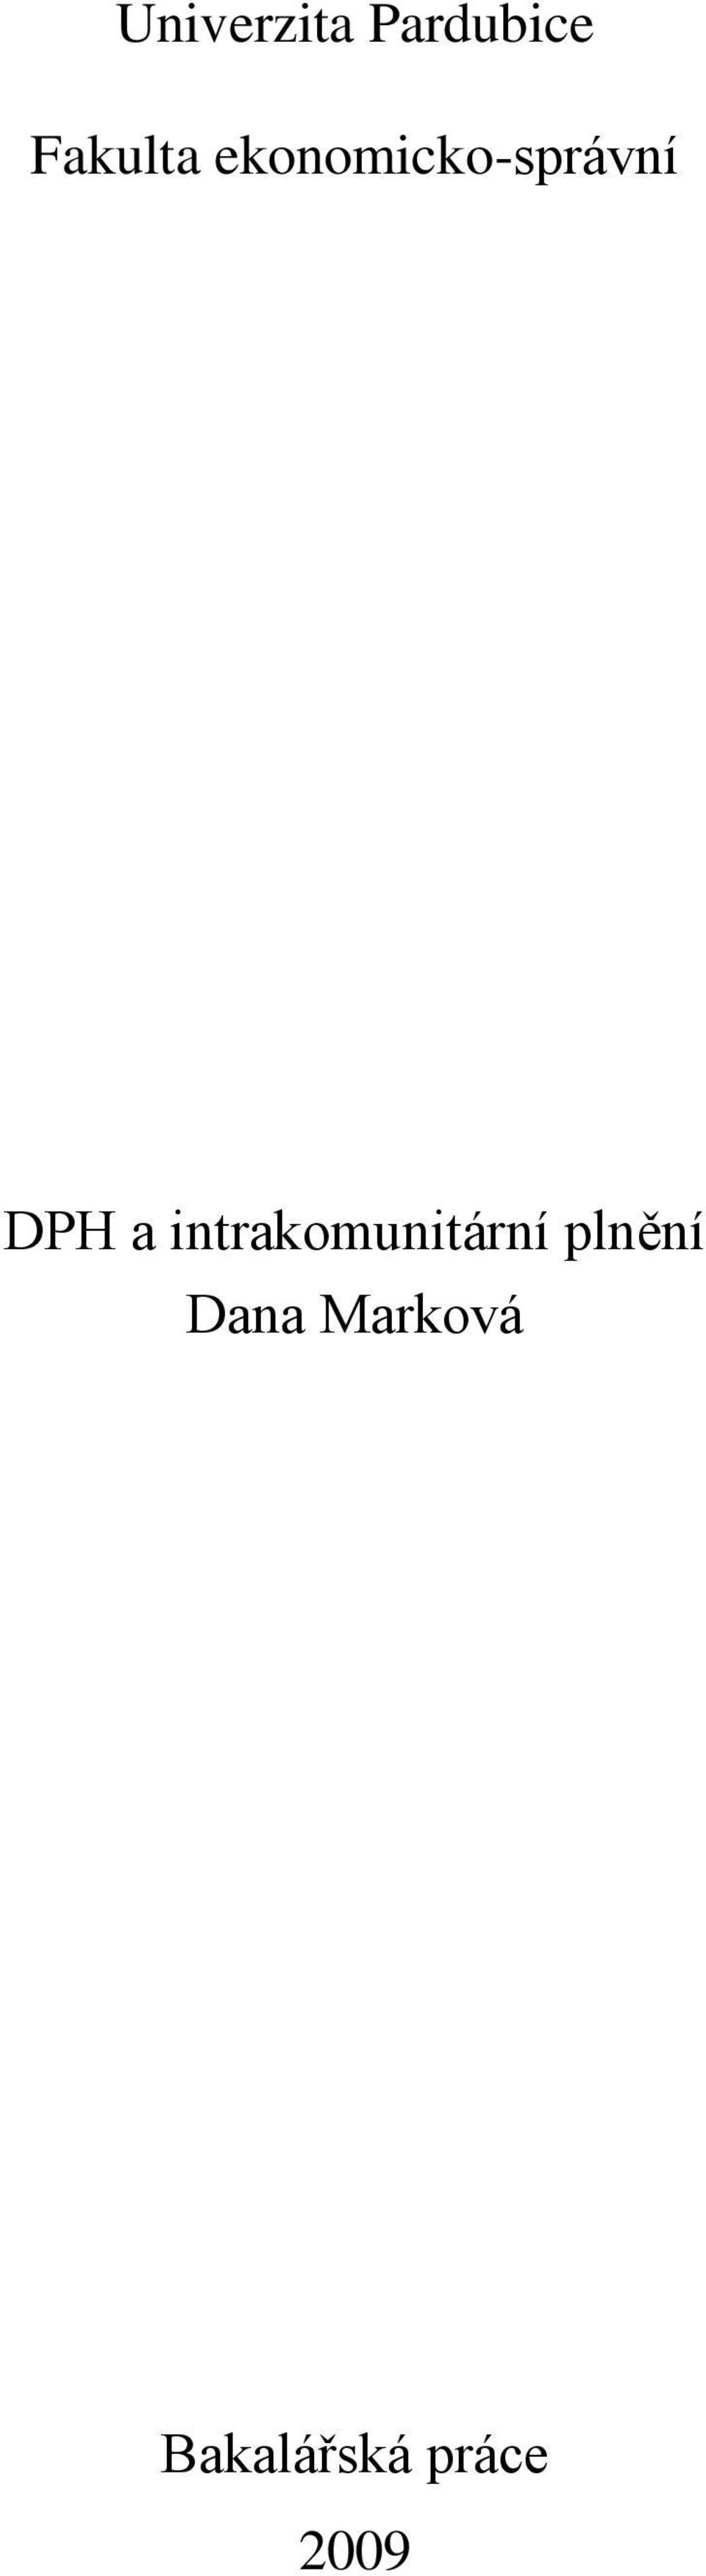 DPH a intrakomunitární